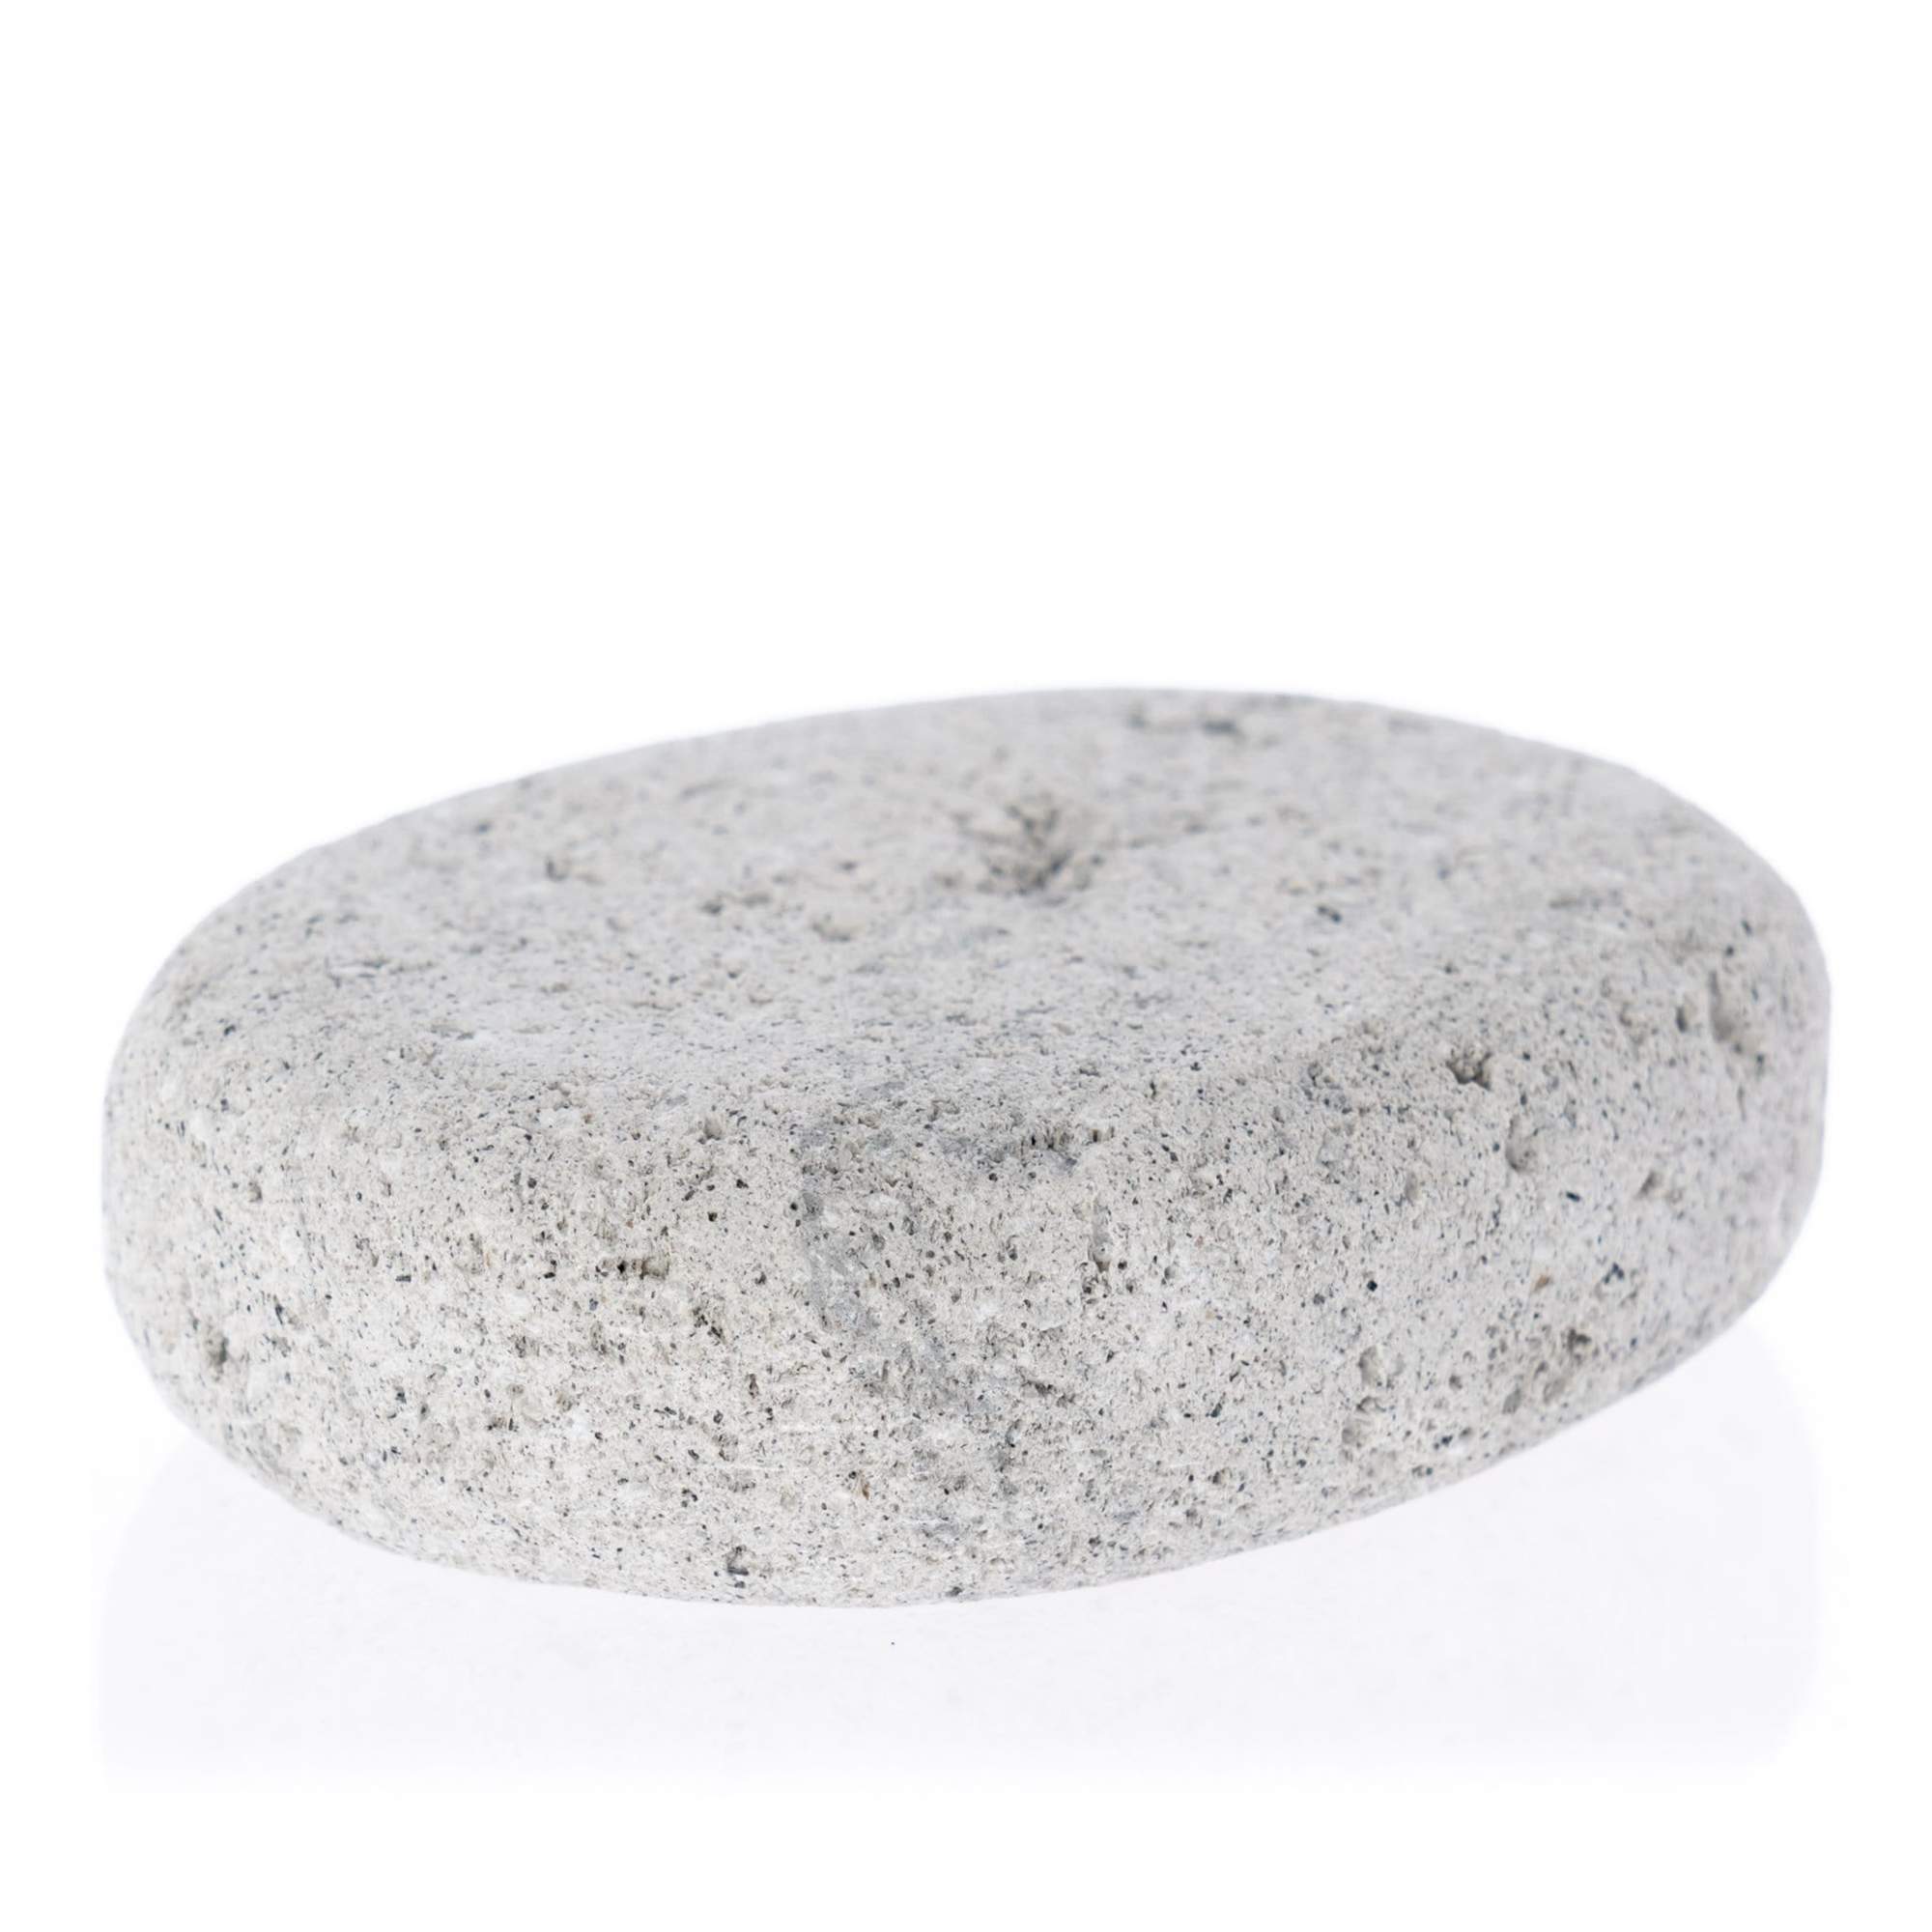 Rocky Mountain Soap - Pumice Stone